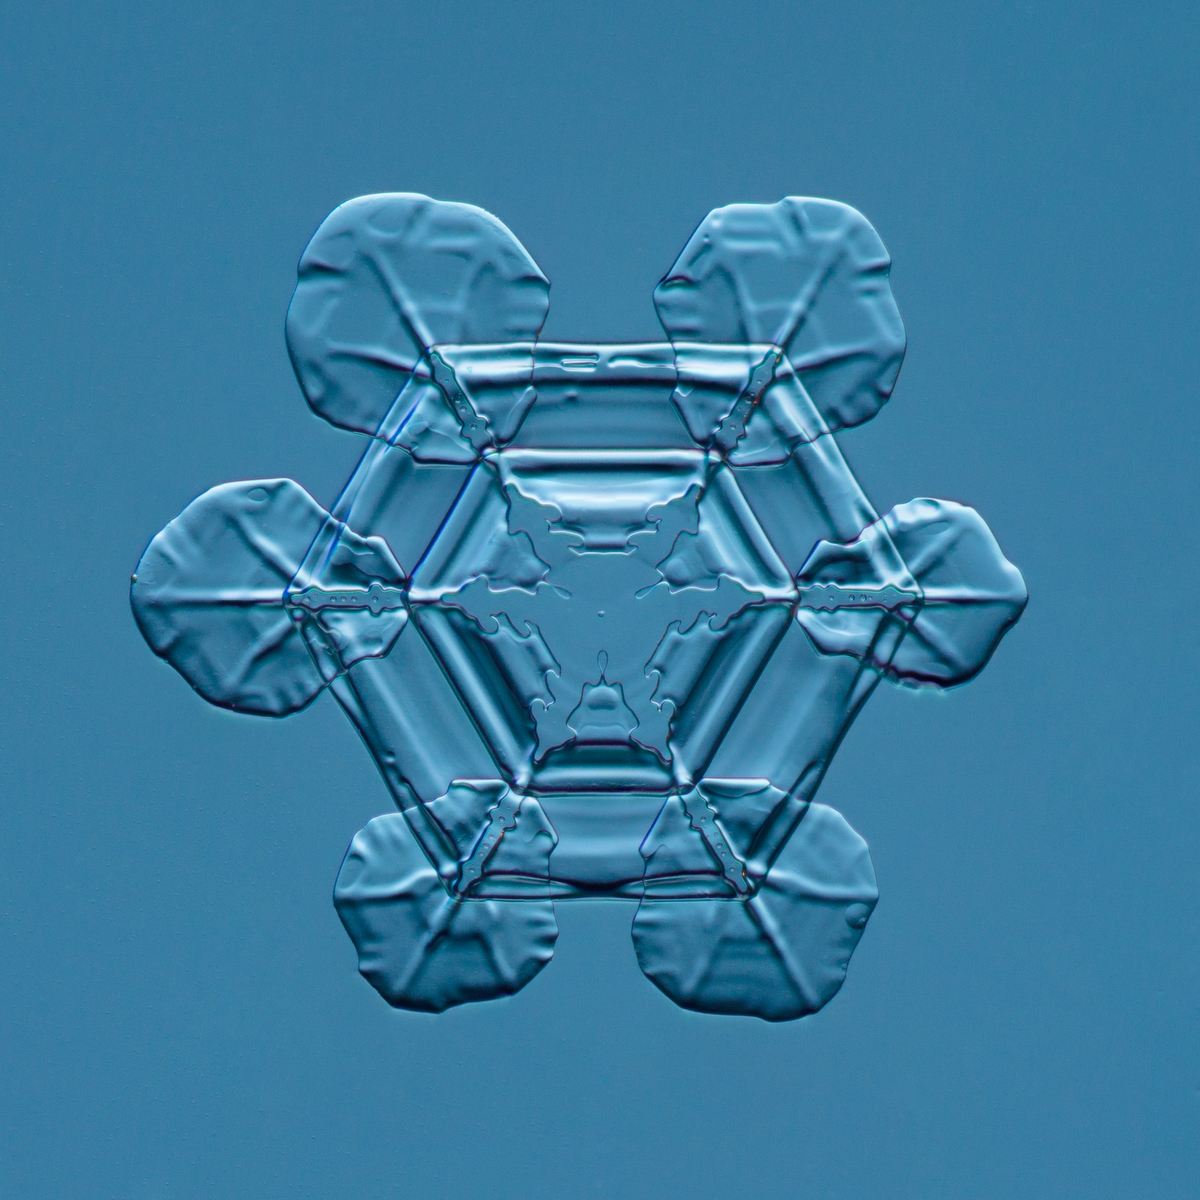 Snowflake 2015.02.25.007